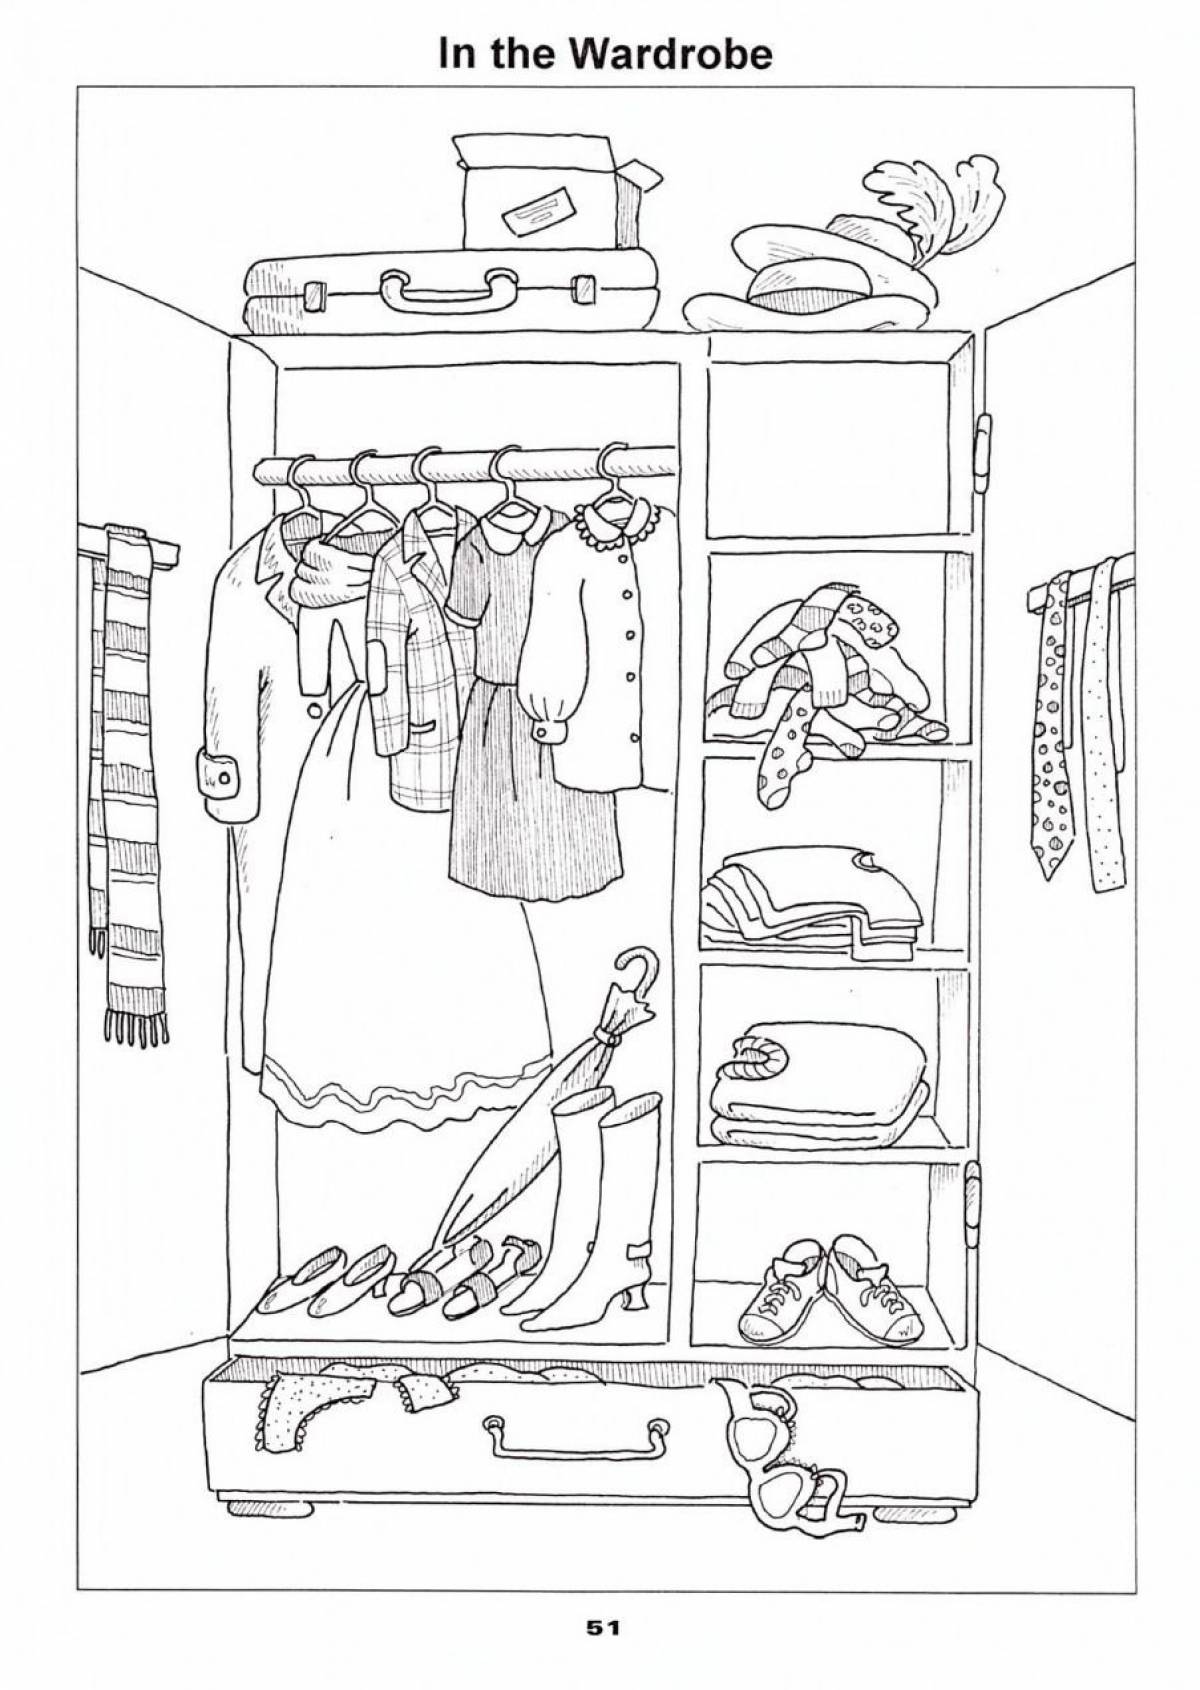 Amazing wardrobe coloring page